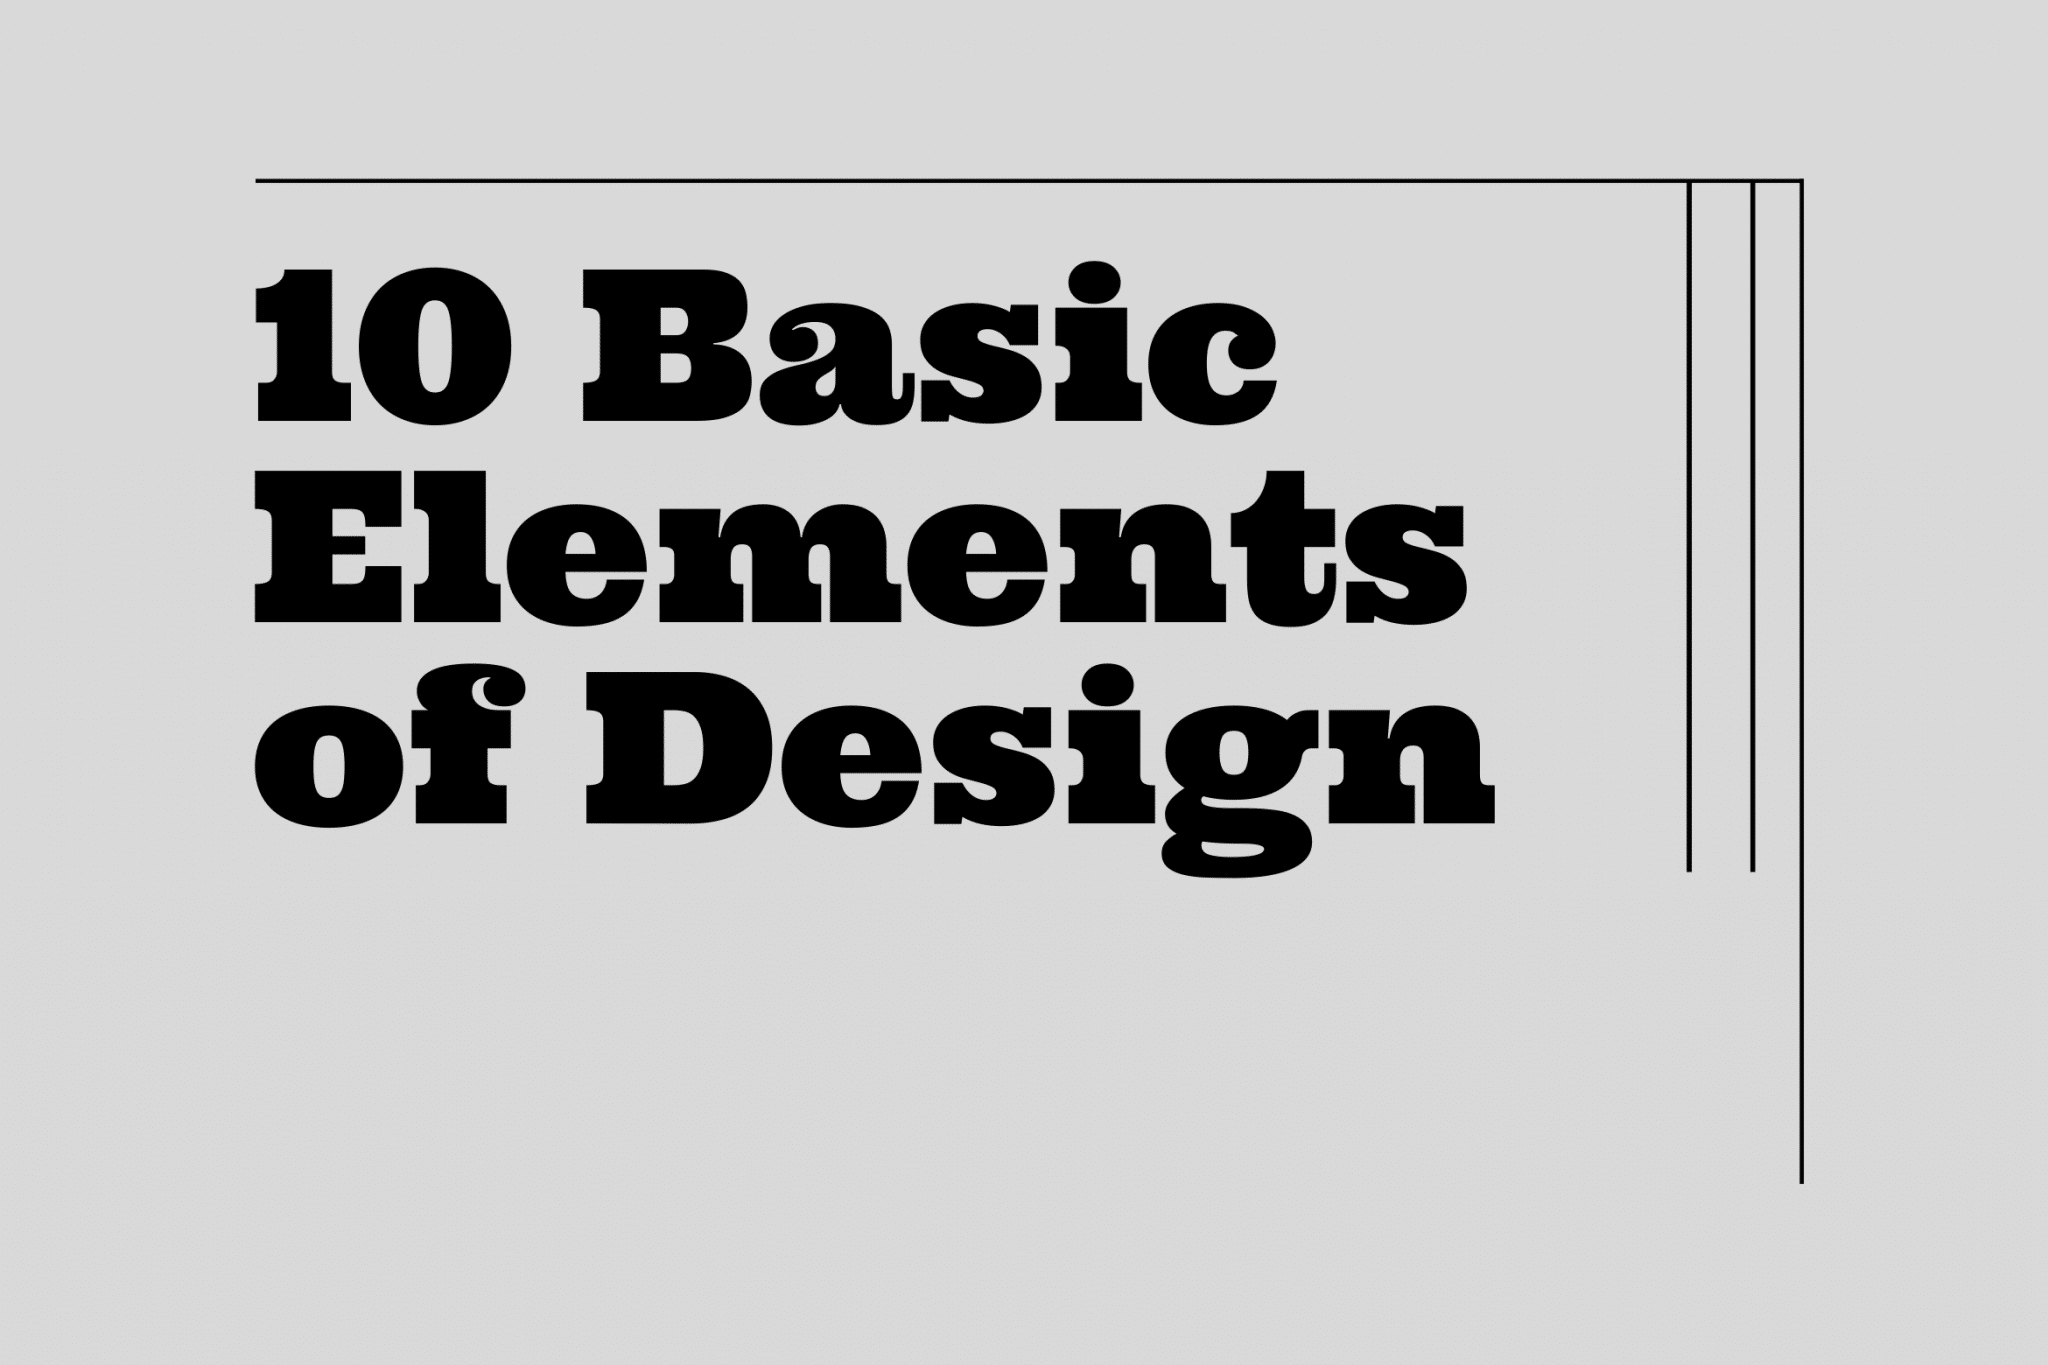 The Basic Elements of Design